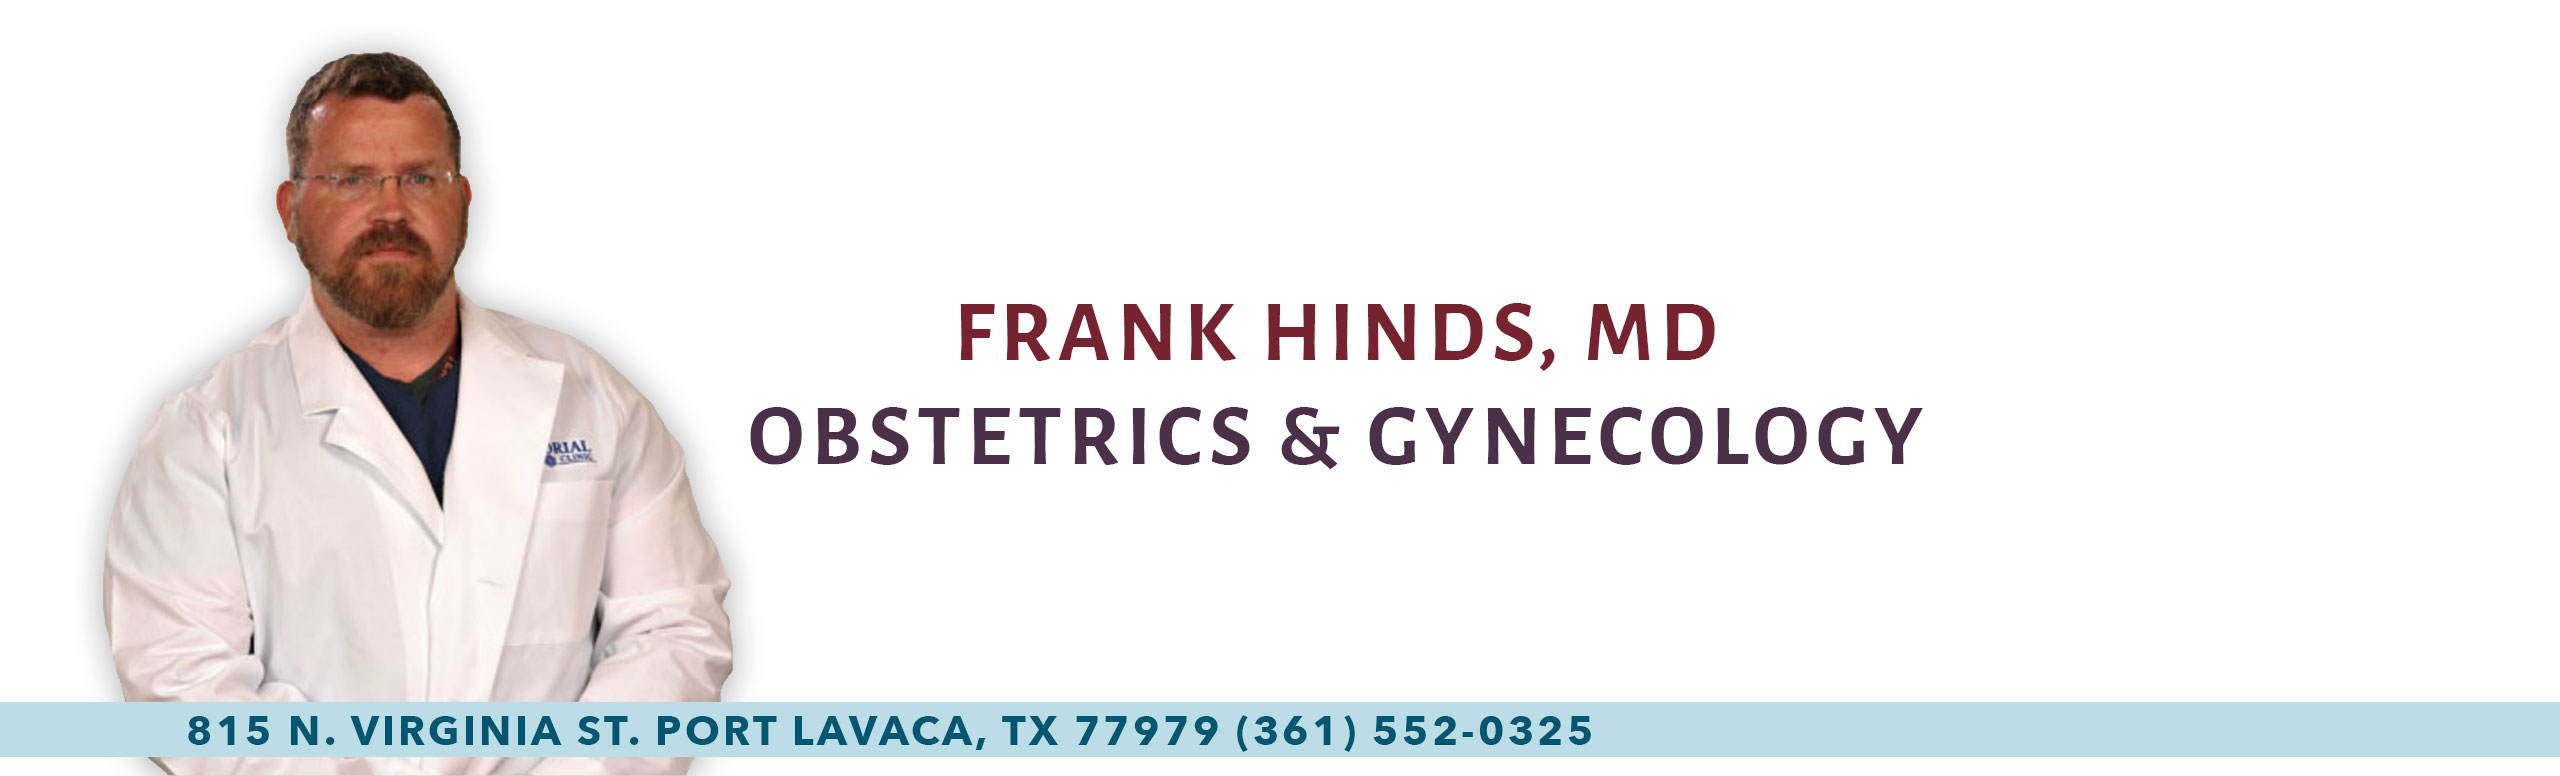 Frank Hinds, MD
Obstetrics & Gynecology